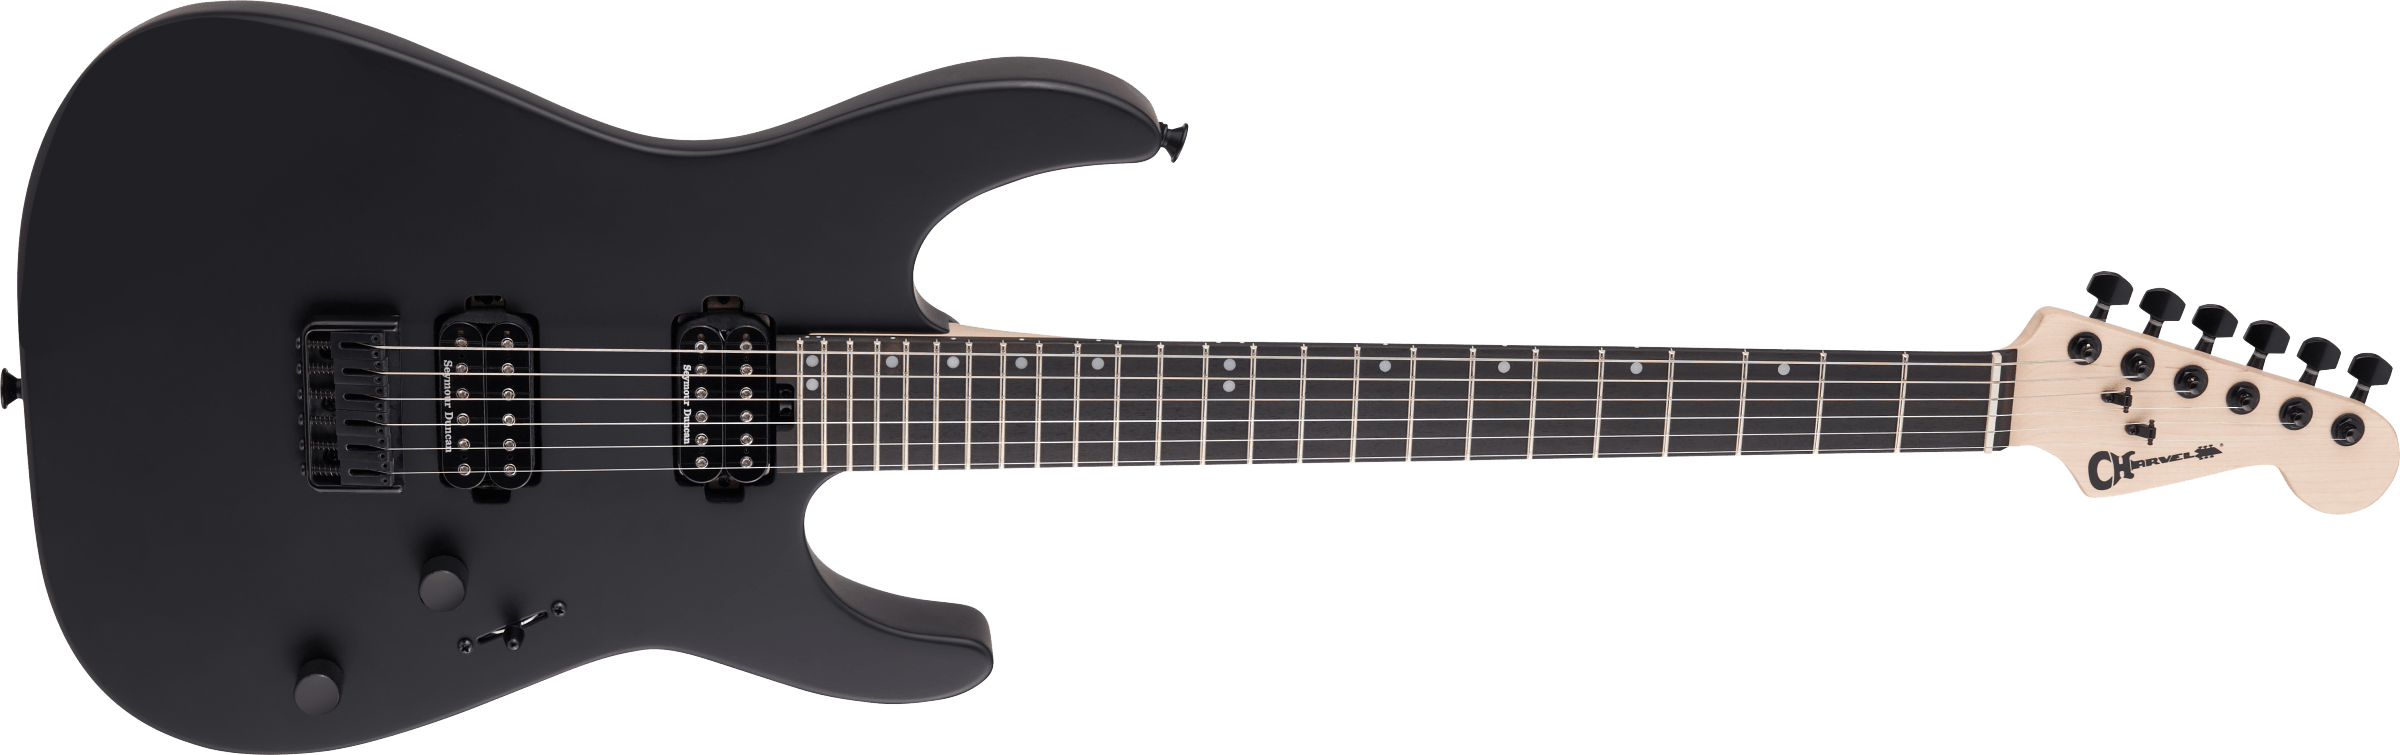 Charvel Dinky Dk24 Hh Ht E Pro-mod 2h Seymour Duncan Eb - Satin Black - E-Gitarre in Str-Form - Variation 2